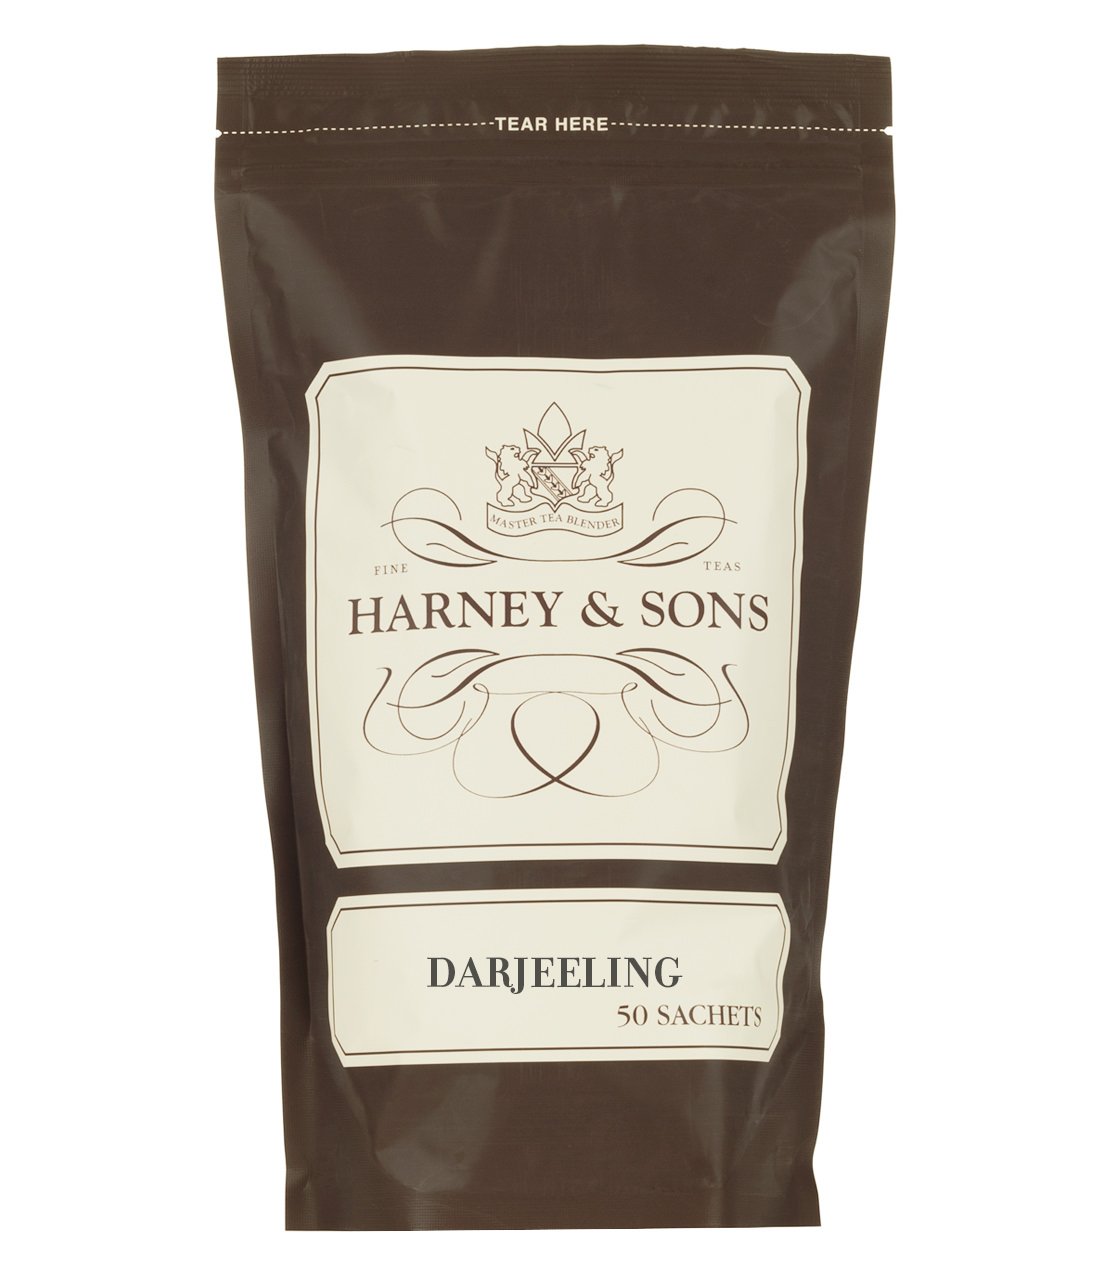 Darjeeling 50 bag - Harney & Sons Teas, European Distribution Center